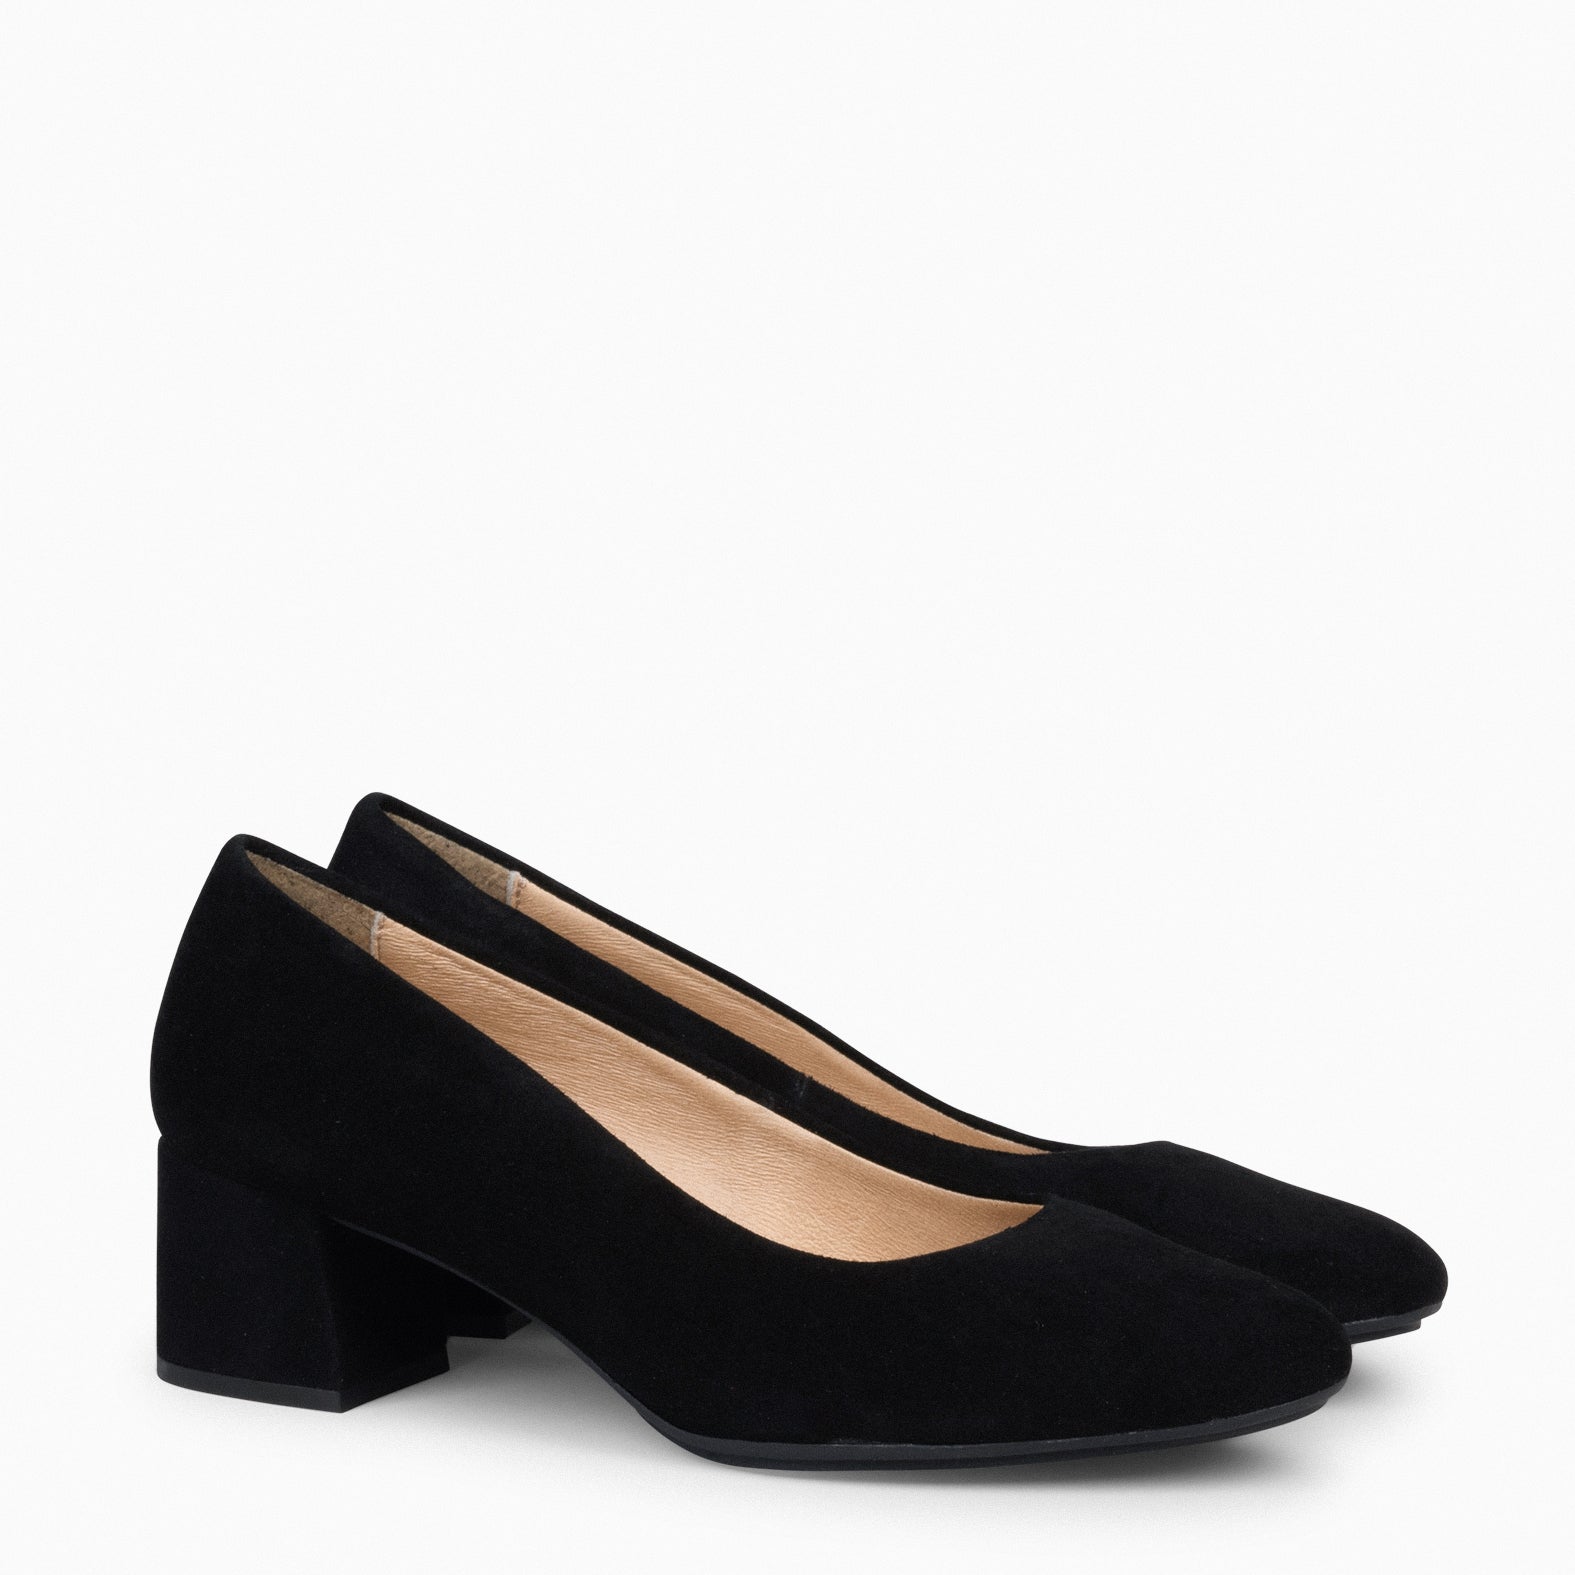 URBAN ROUND – BLACK suede leather low heels